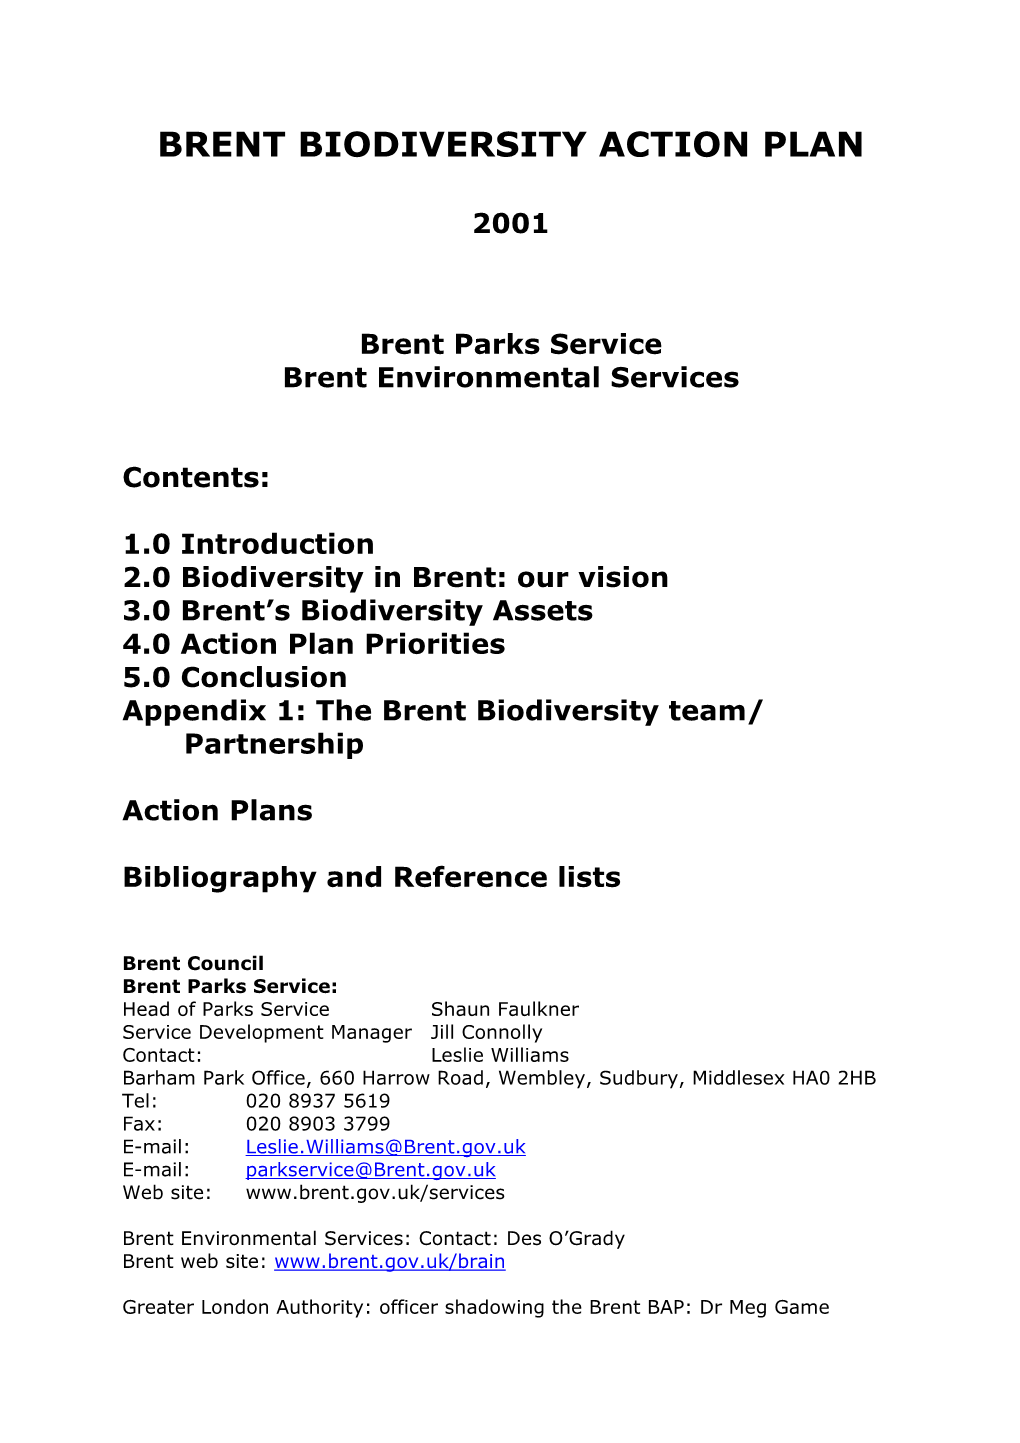 Brent Biodiversity Action Plan 2001